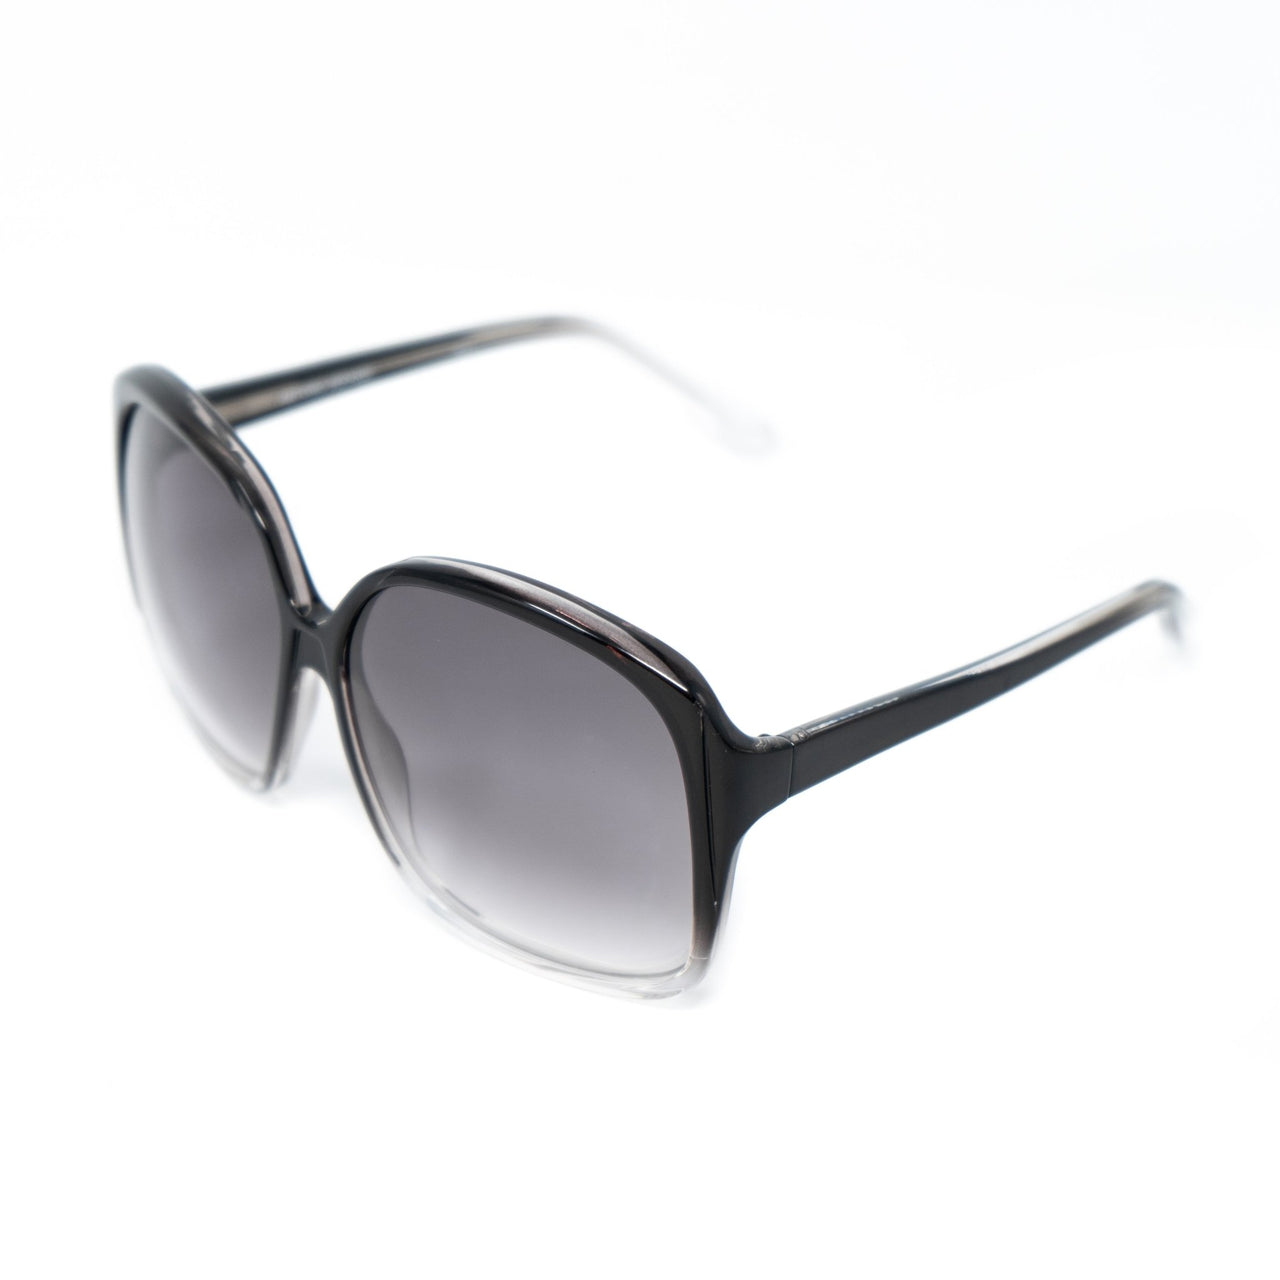 Antonio Berardi Women Sunglasses Oversized Frame Black and Grey Graduated Lenses - 9AB2C1BLACK - Watches & Crystals